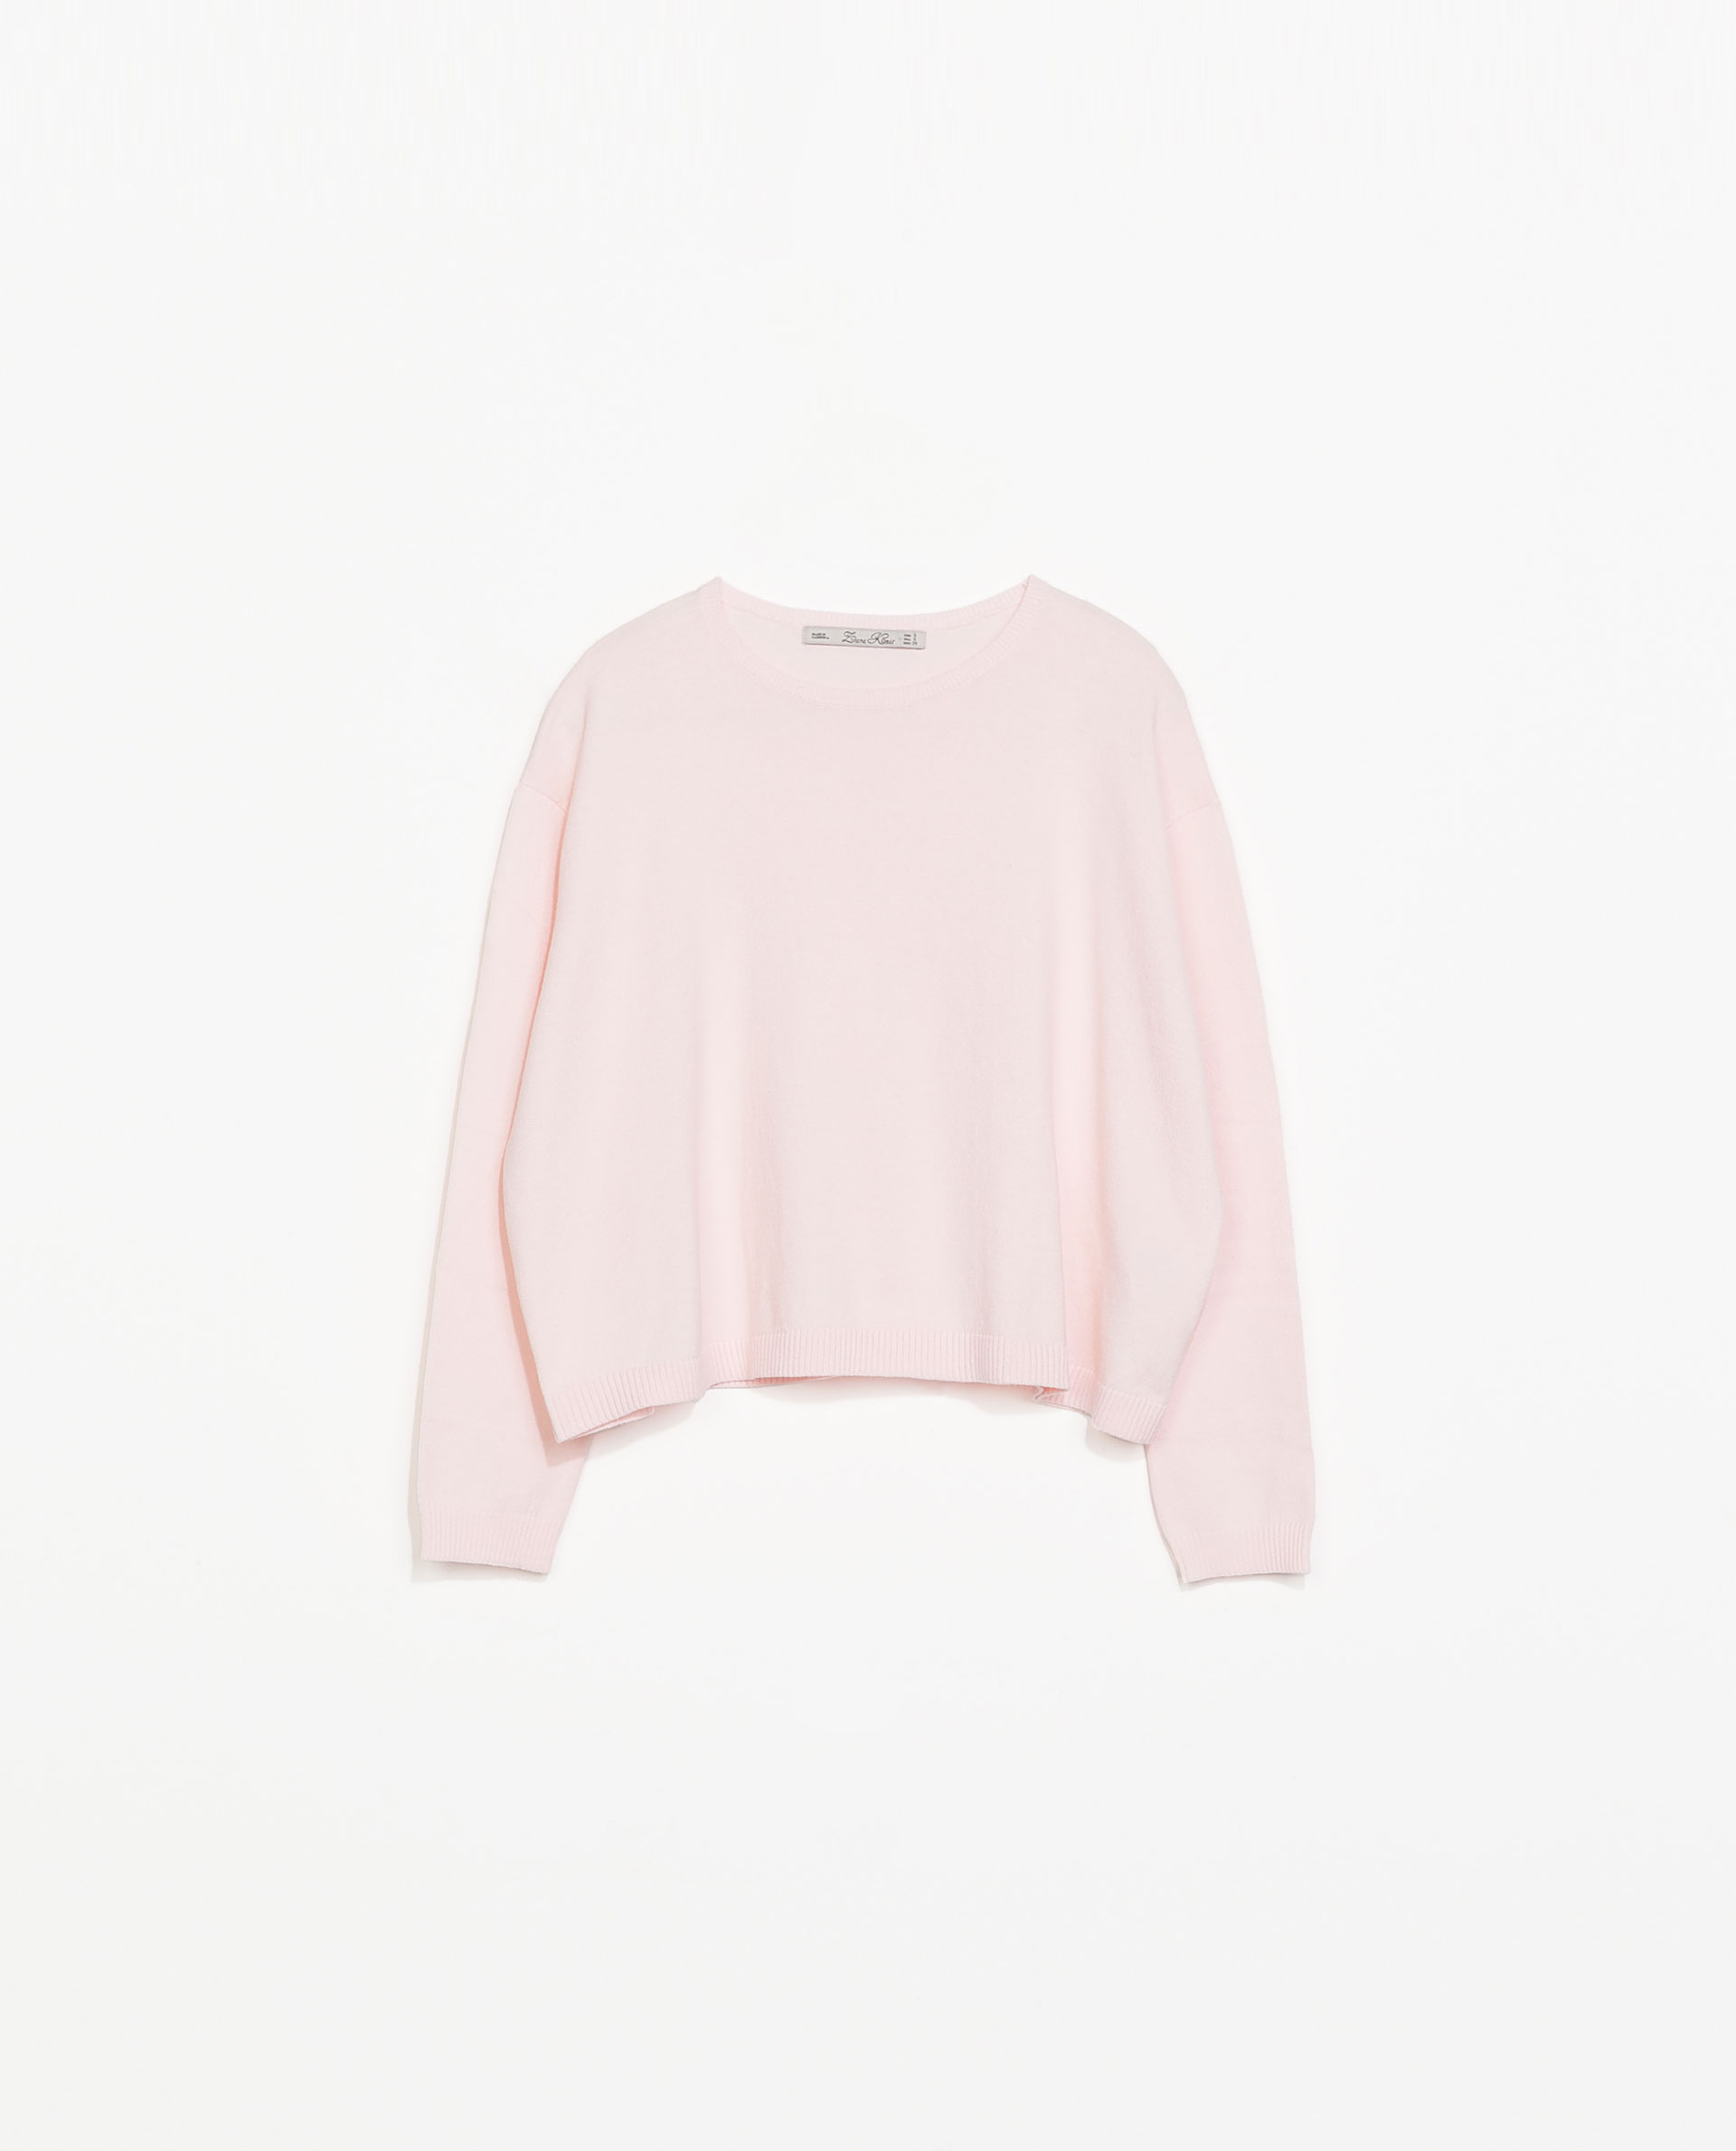 Zara Cropped Jumper in Pink | Lyst